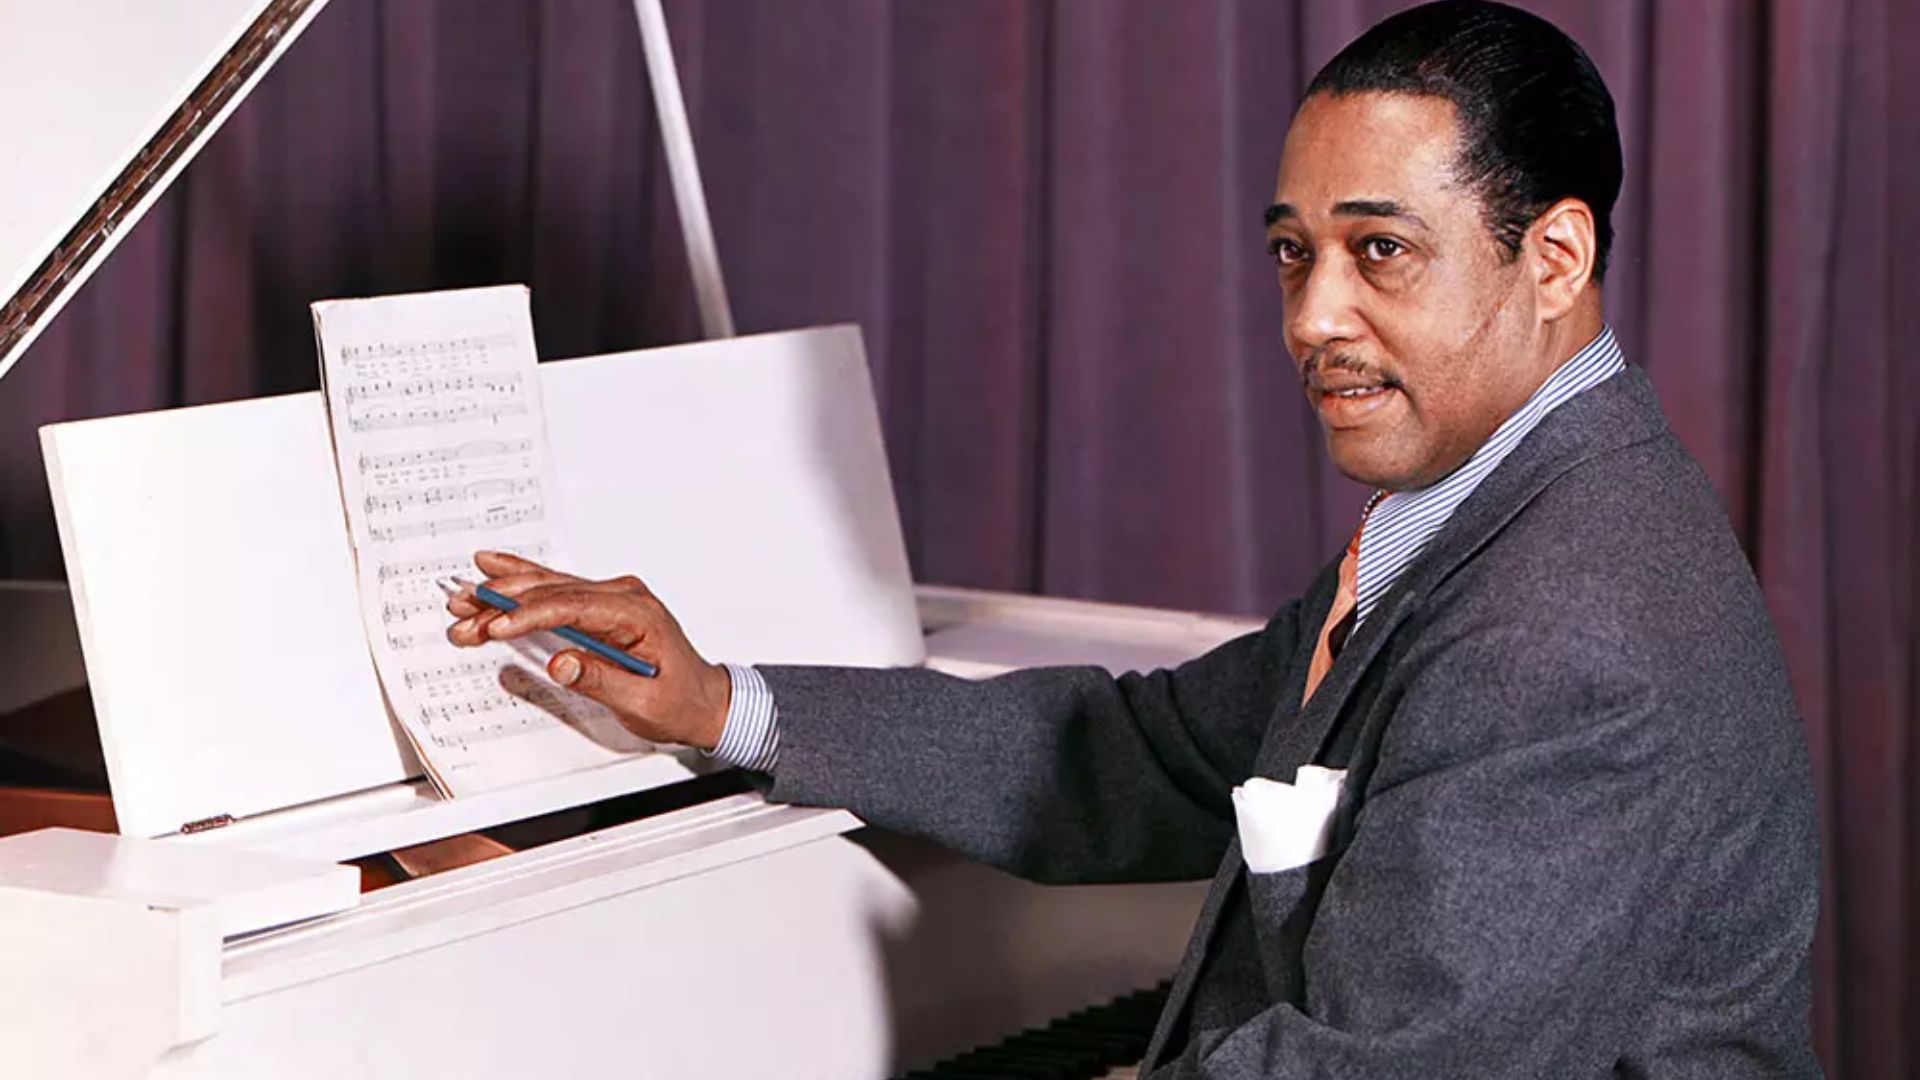 Duke Ellington Playing Piano